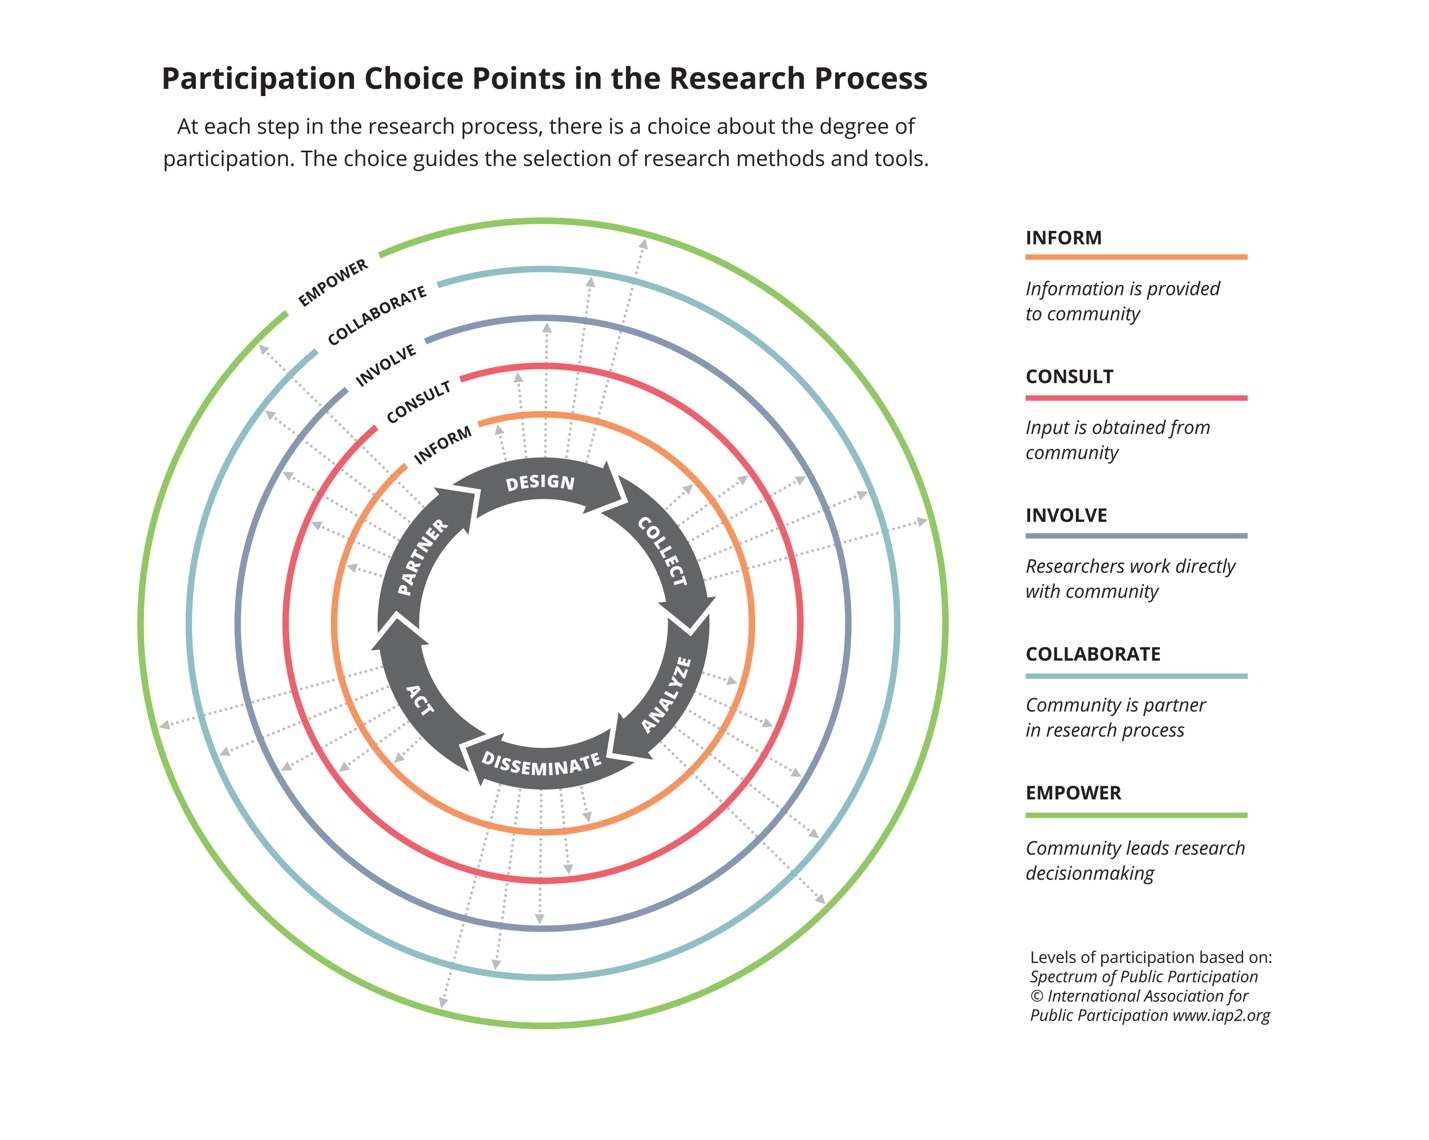 Survey Design Secrets: Engaging Techniques for High Participation - Types of Questions to Maximise Participation